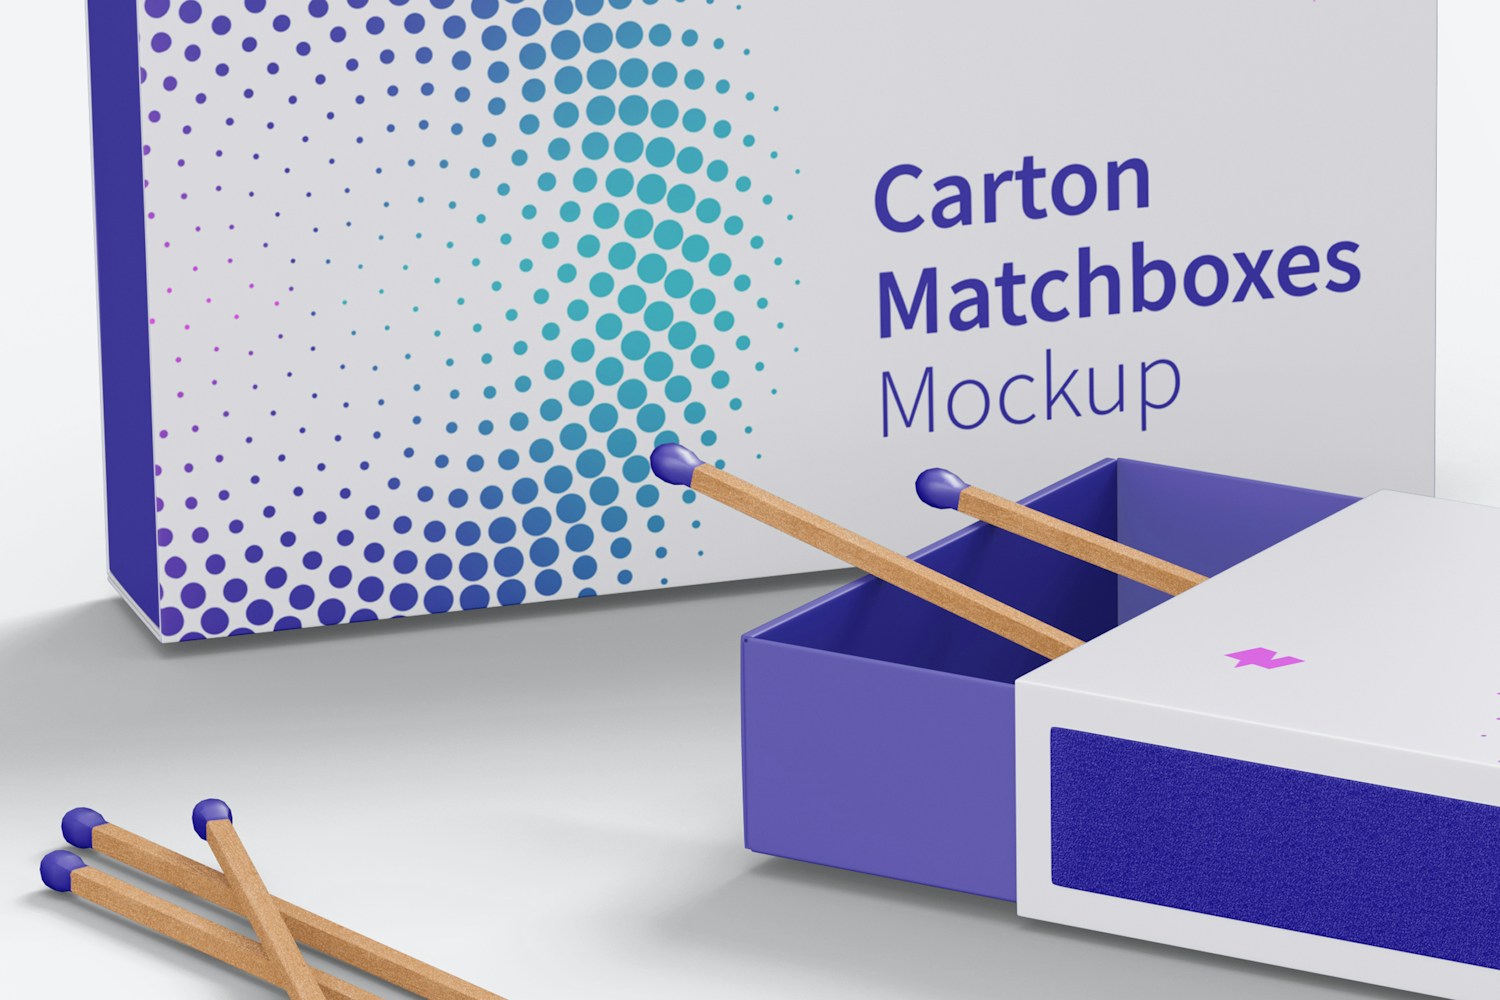 Carton Matchboxes Mockup, Side View